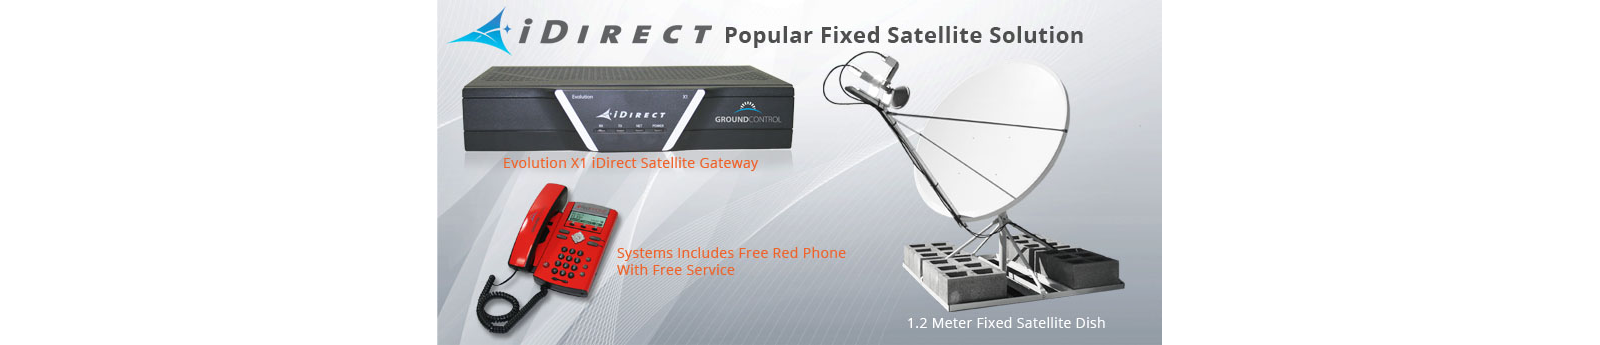 iDirect_Fixed_Satellite_Solution_X1